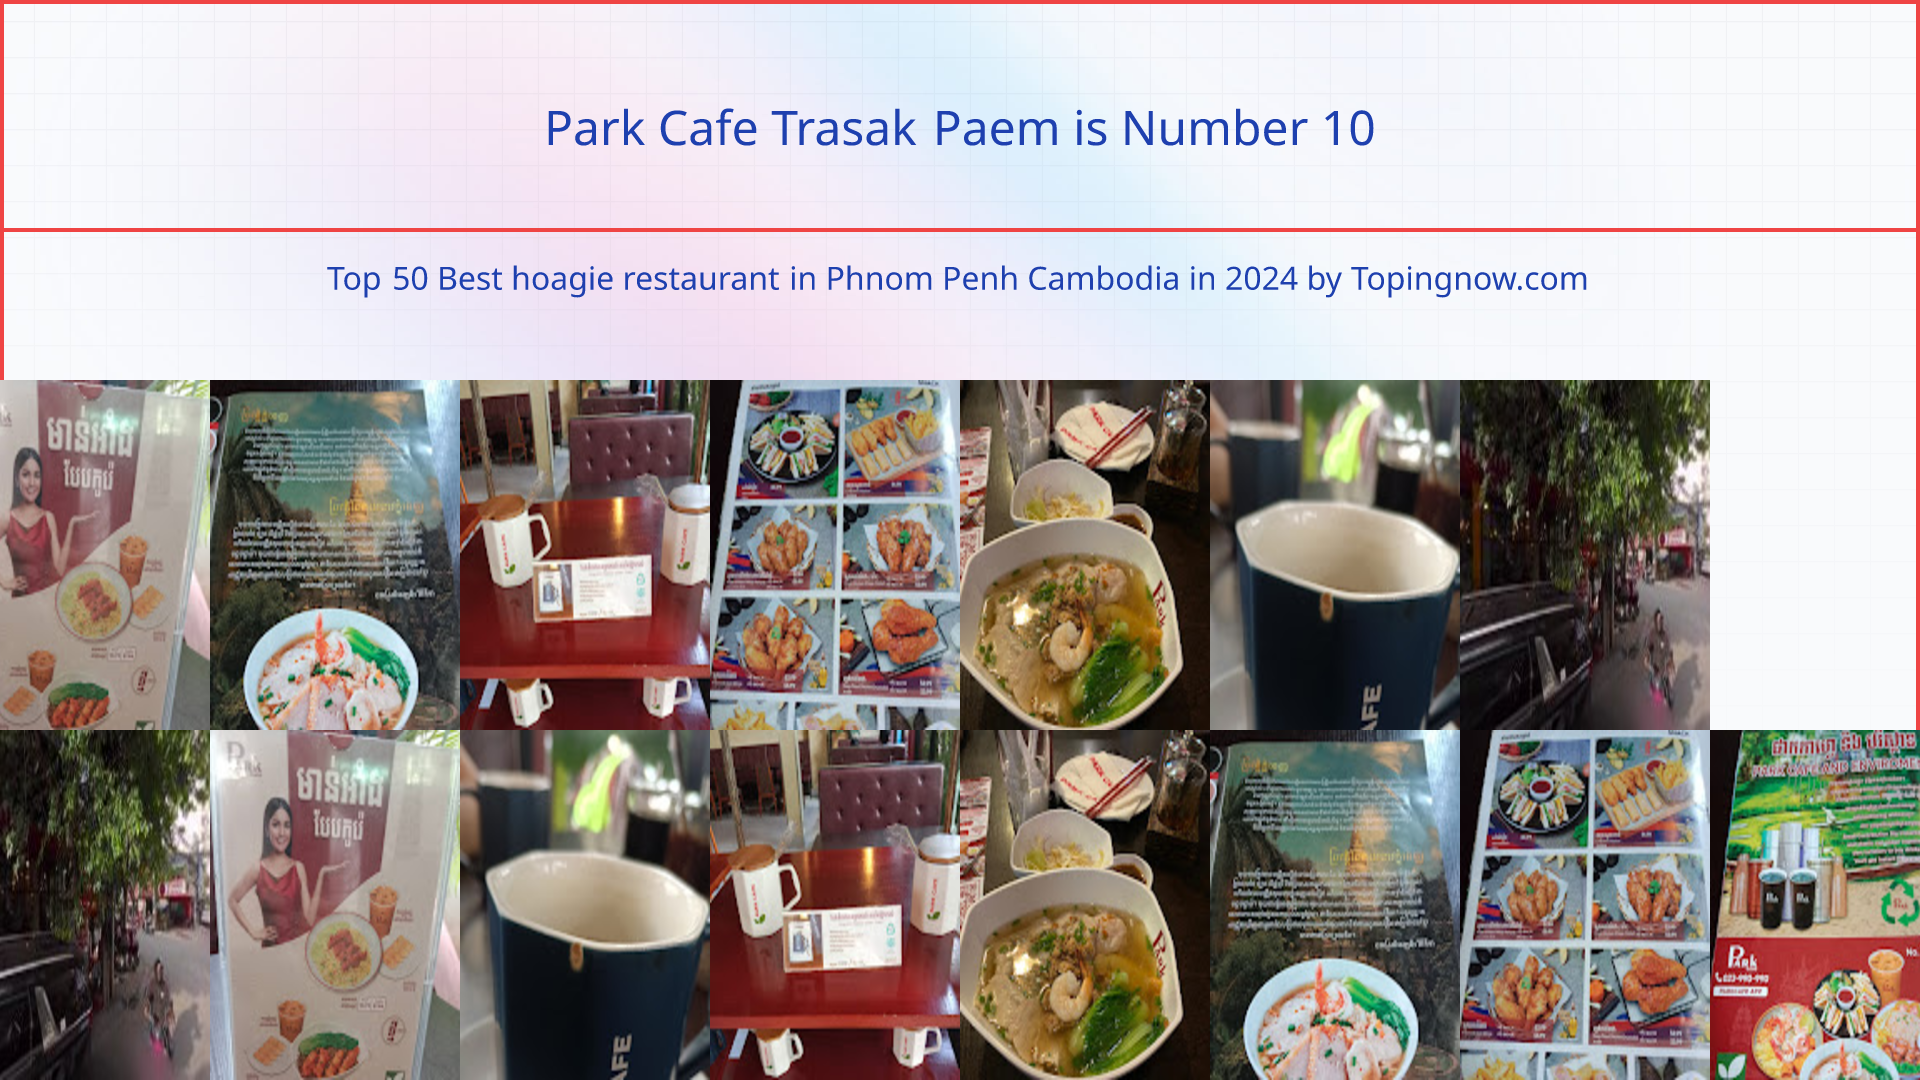 Park Cafe Trasak Paem: Top 50 Best hoagie restaurant in Phnom Penh Cambodia in 2024